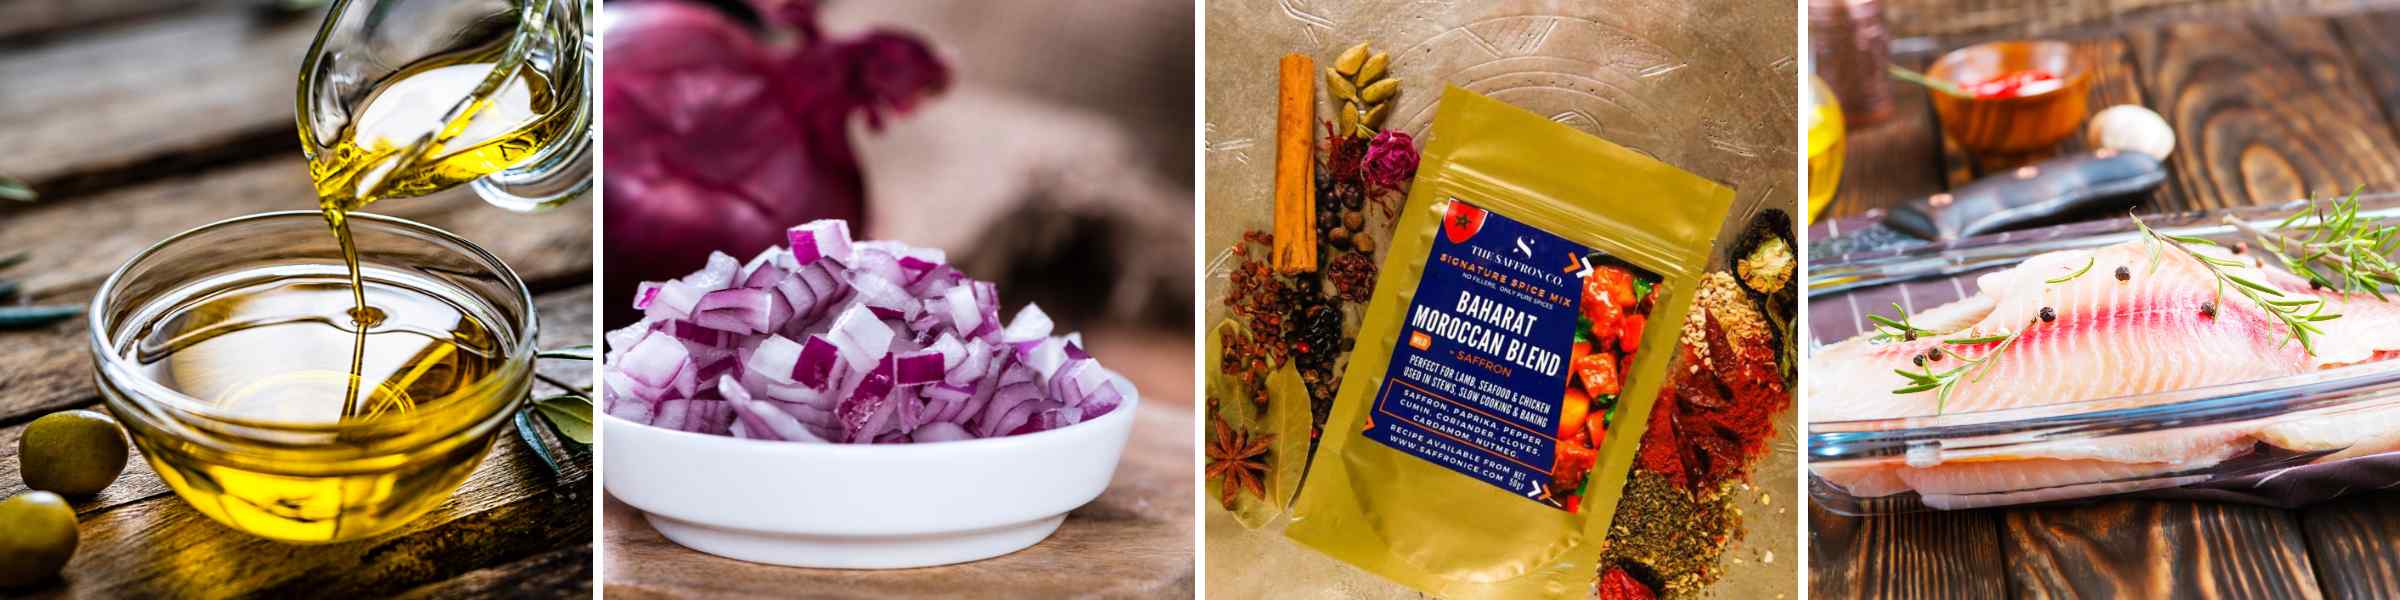 Barramundi with Baharat Moroccan Spice Ingredients